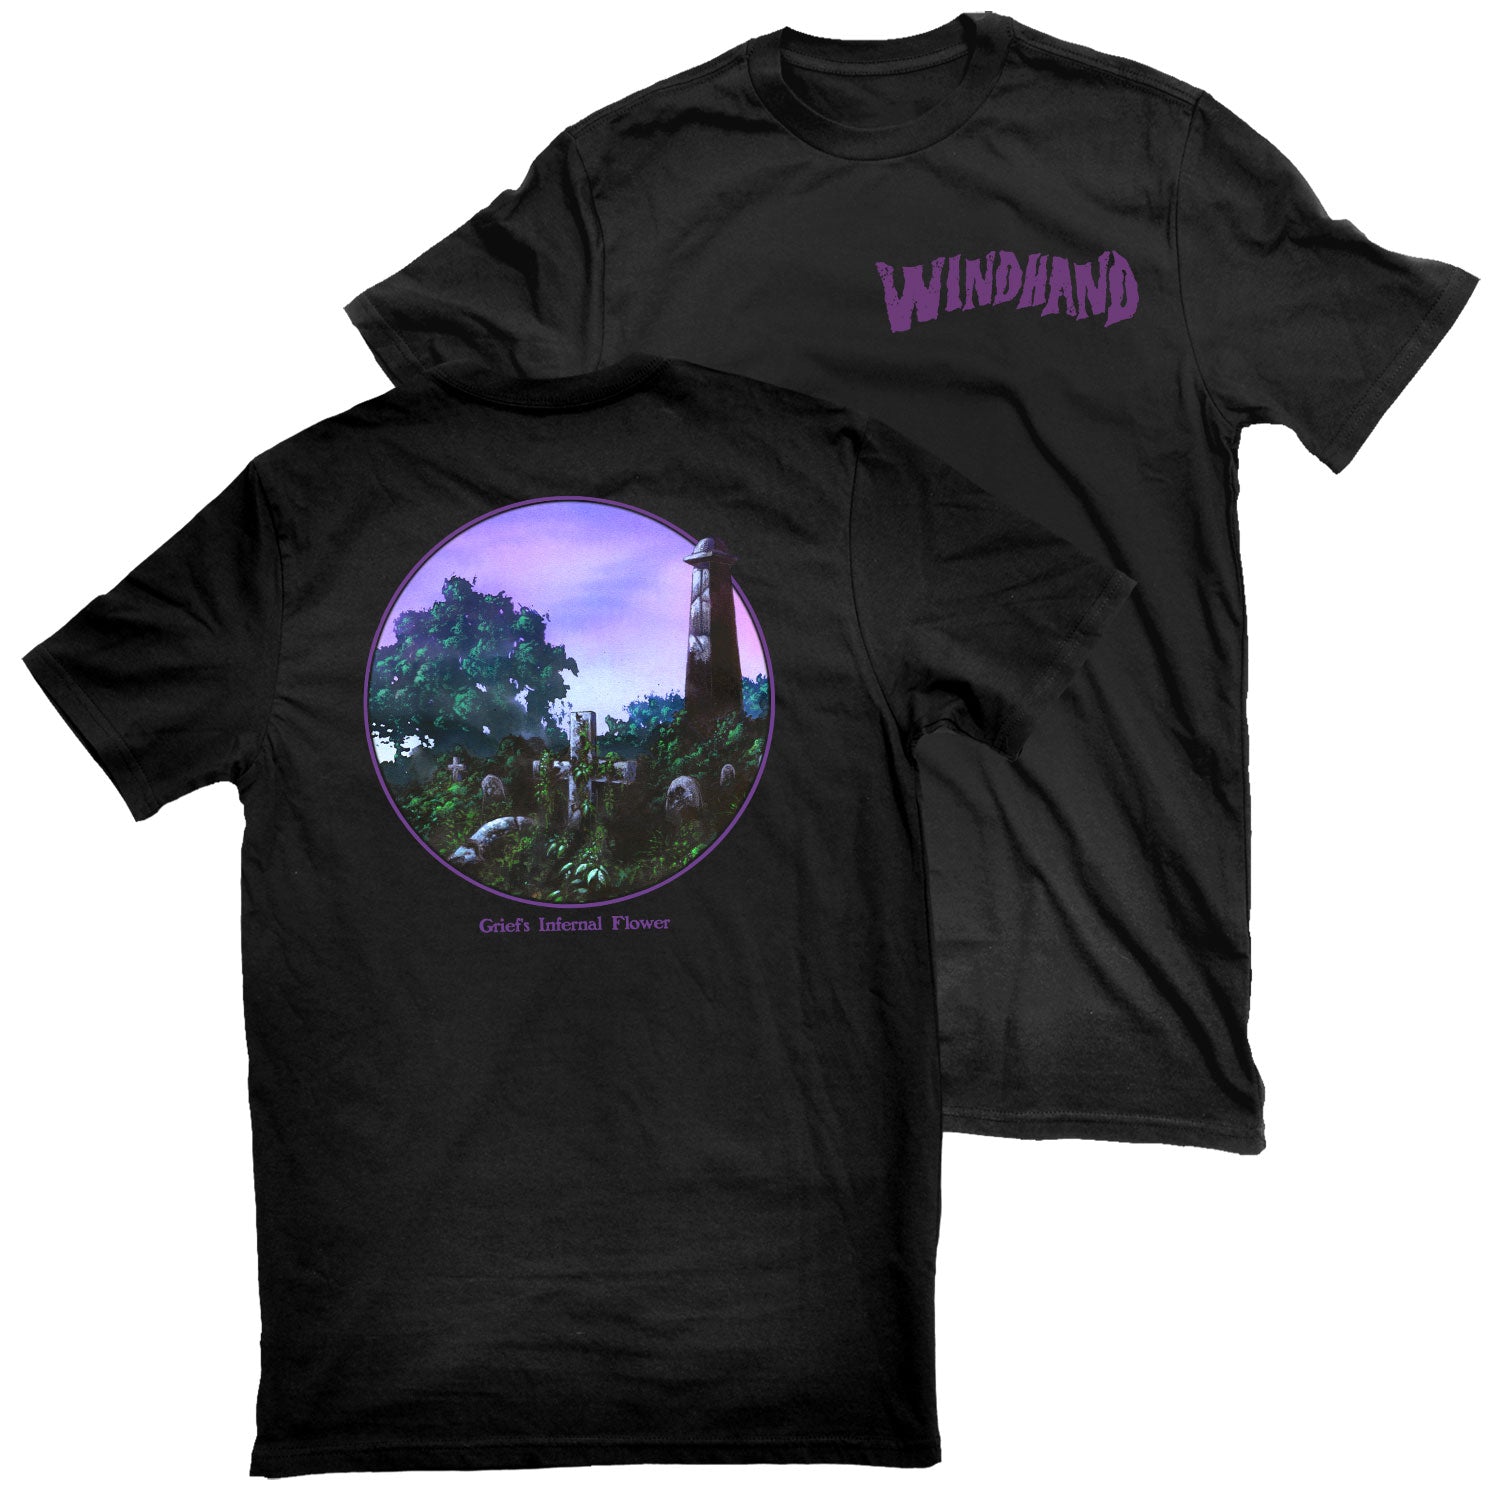 Windhand "Grief's Infernal Flower" T-Shirt